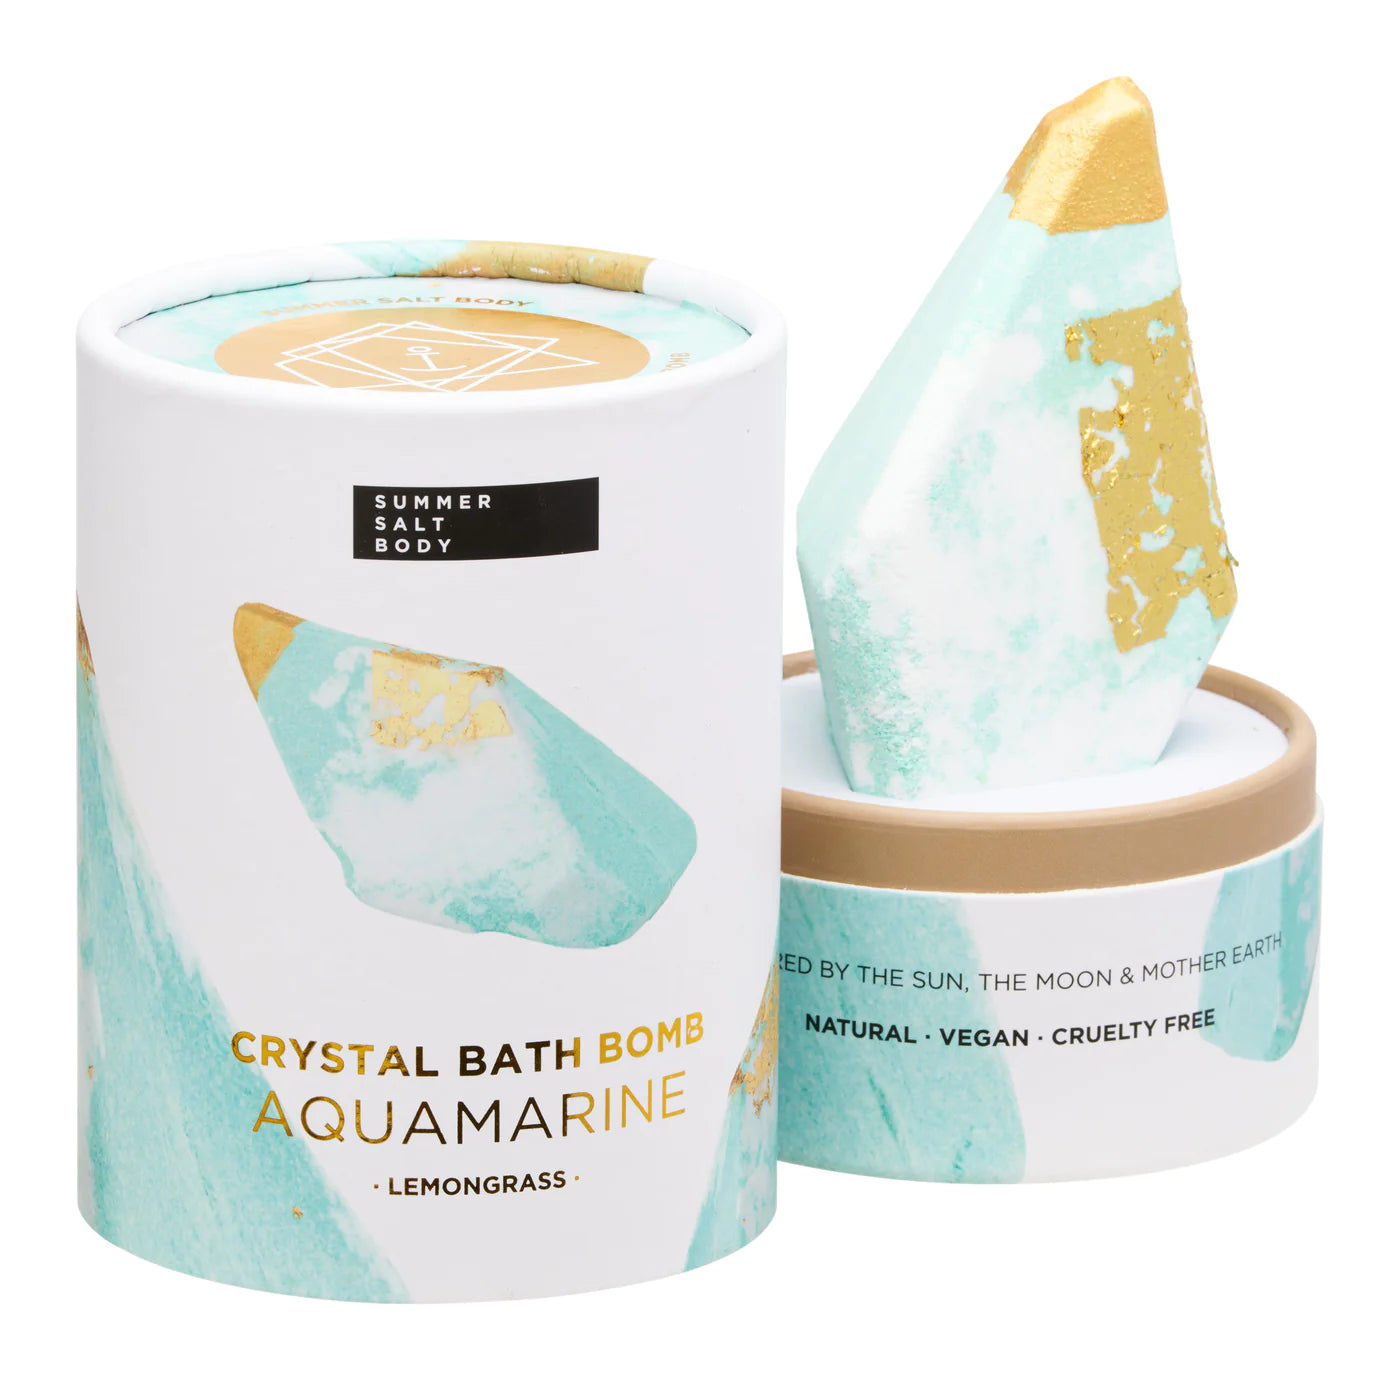 Load image into Gallery viewer, Summer Salt Body - Crystal Bath Bomb (Aquamarine Lemongrass)
